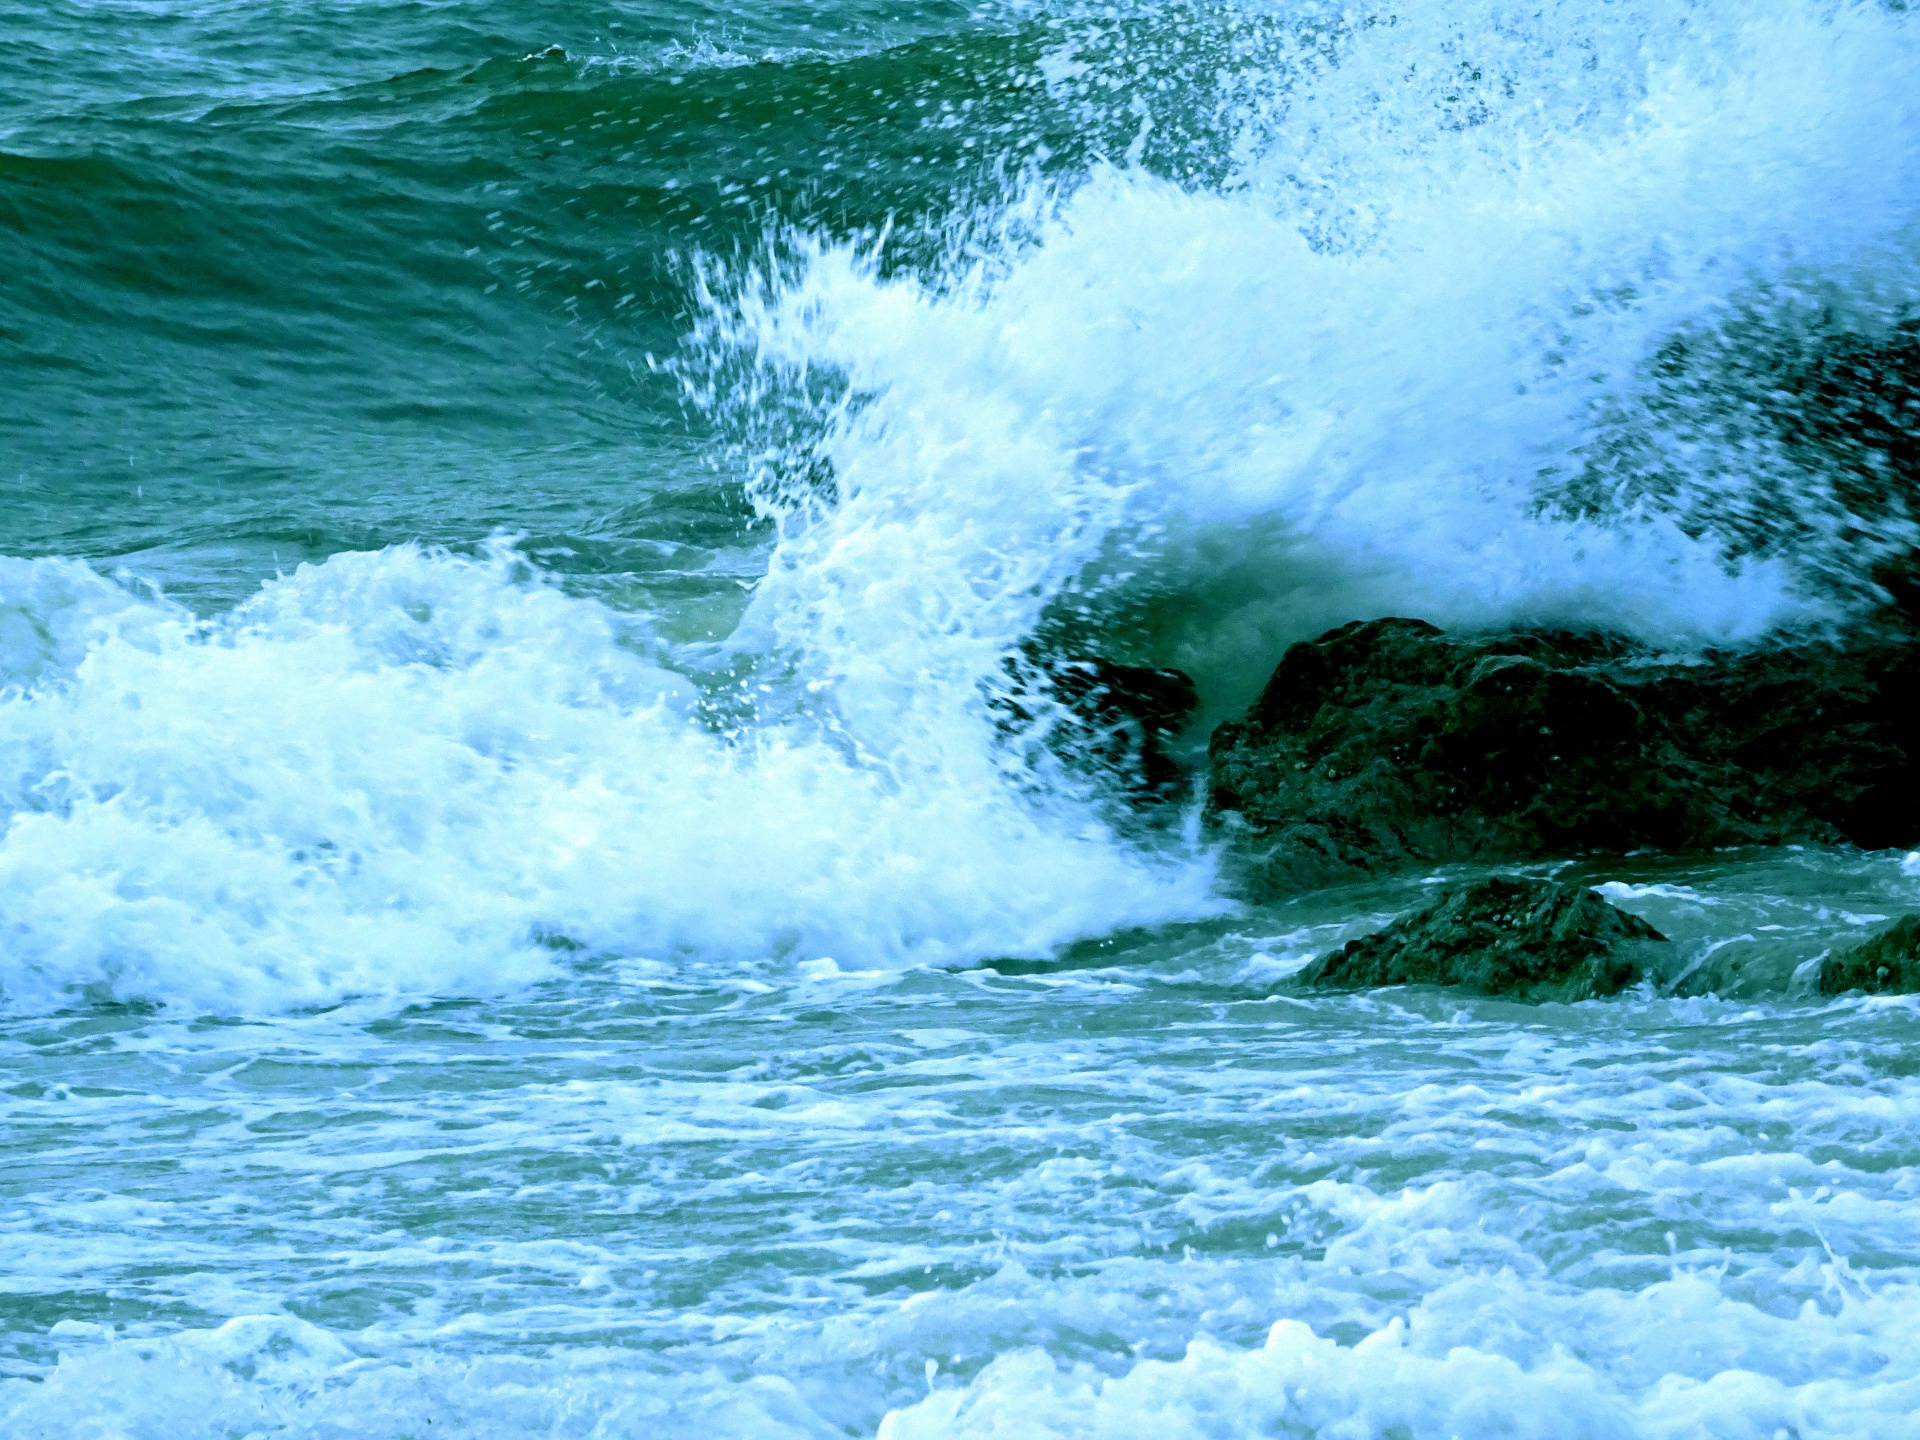 Ocean Waves Crashing On Rocks Free Stock Photo - Public Domain Pictures